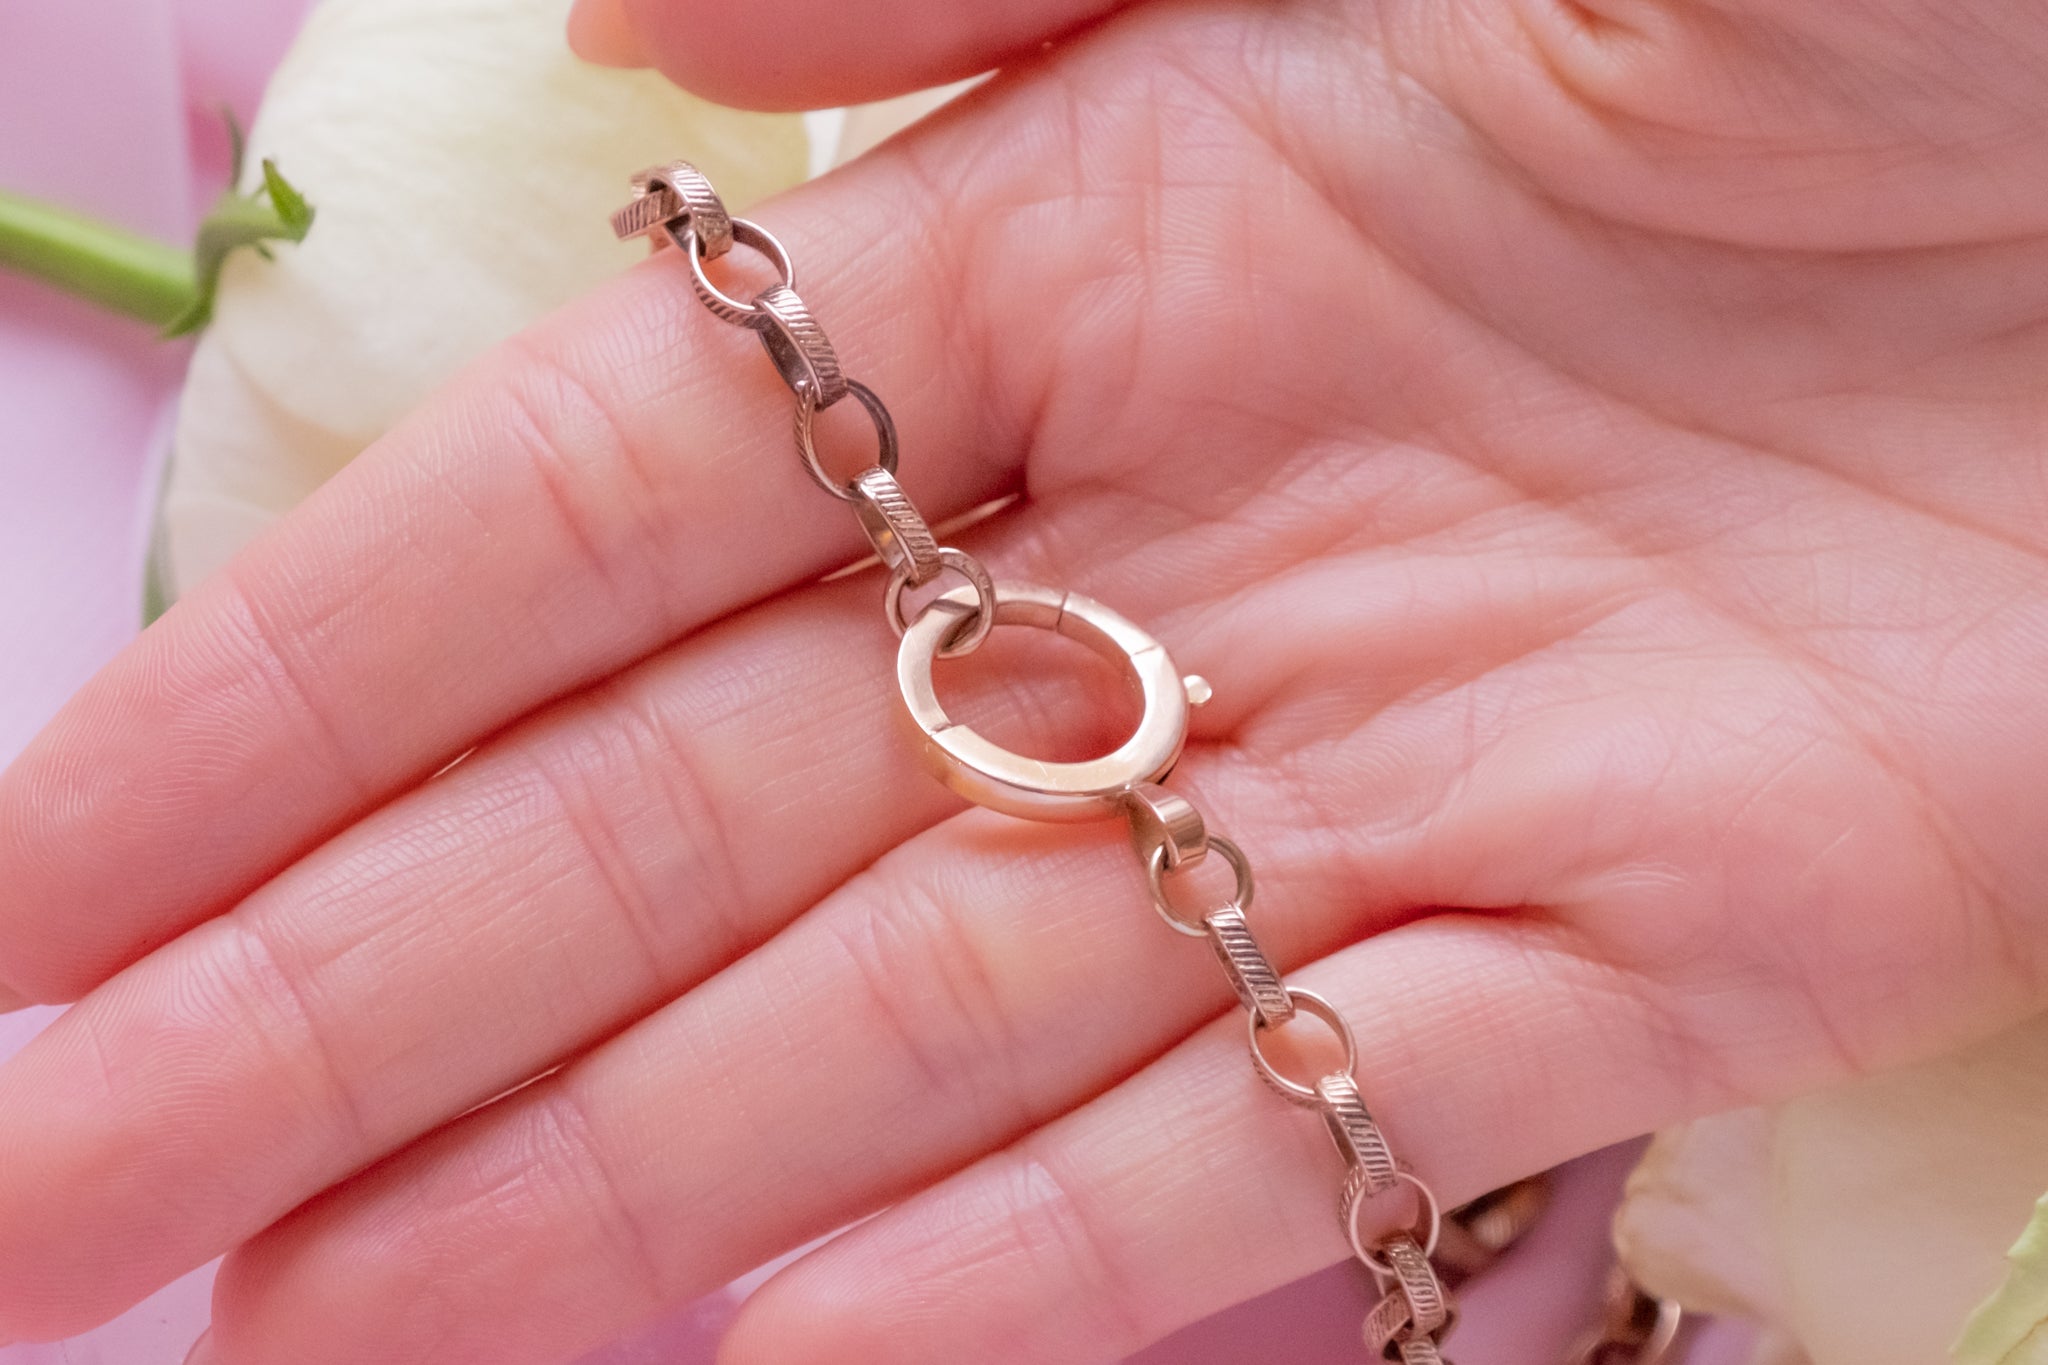 9ct White Gold 16 Inch Belcher Chain Heart Charm T-Bar Necklace